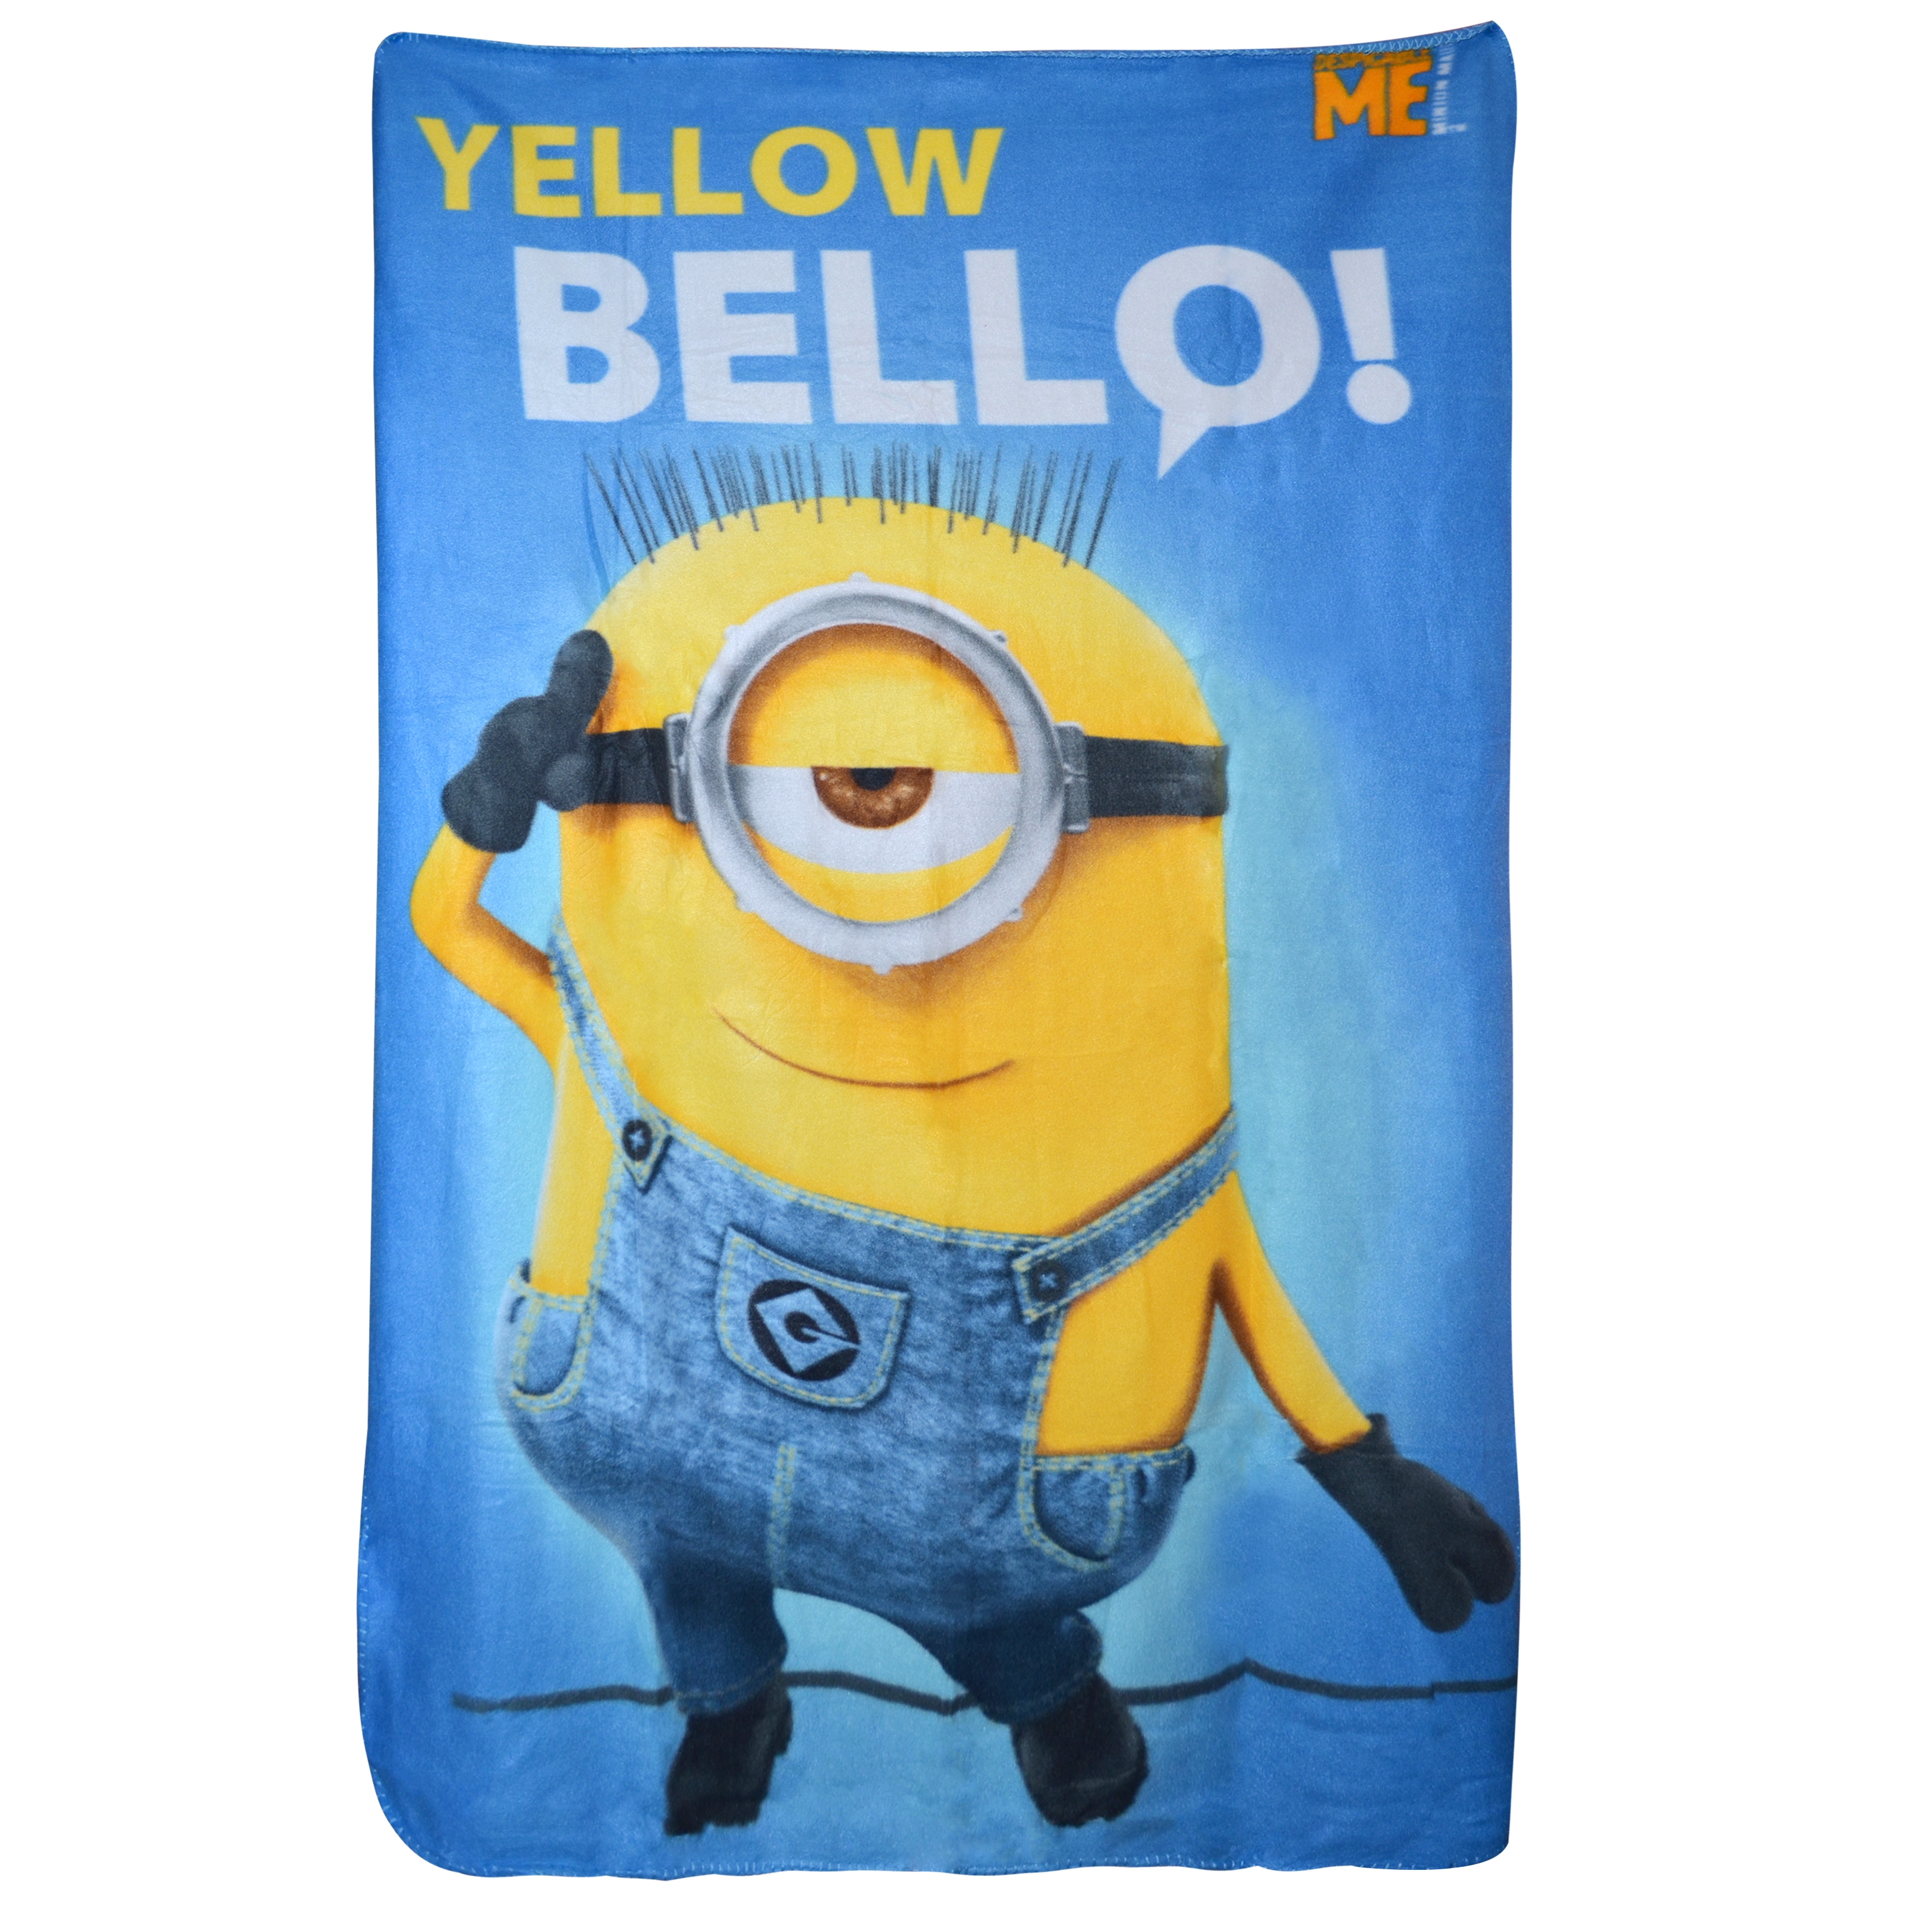 Despicable Me Minions 'Yellow Bellow' Panel Fleece Blanket Throw